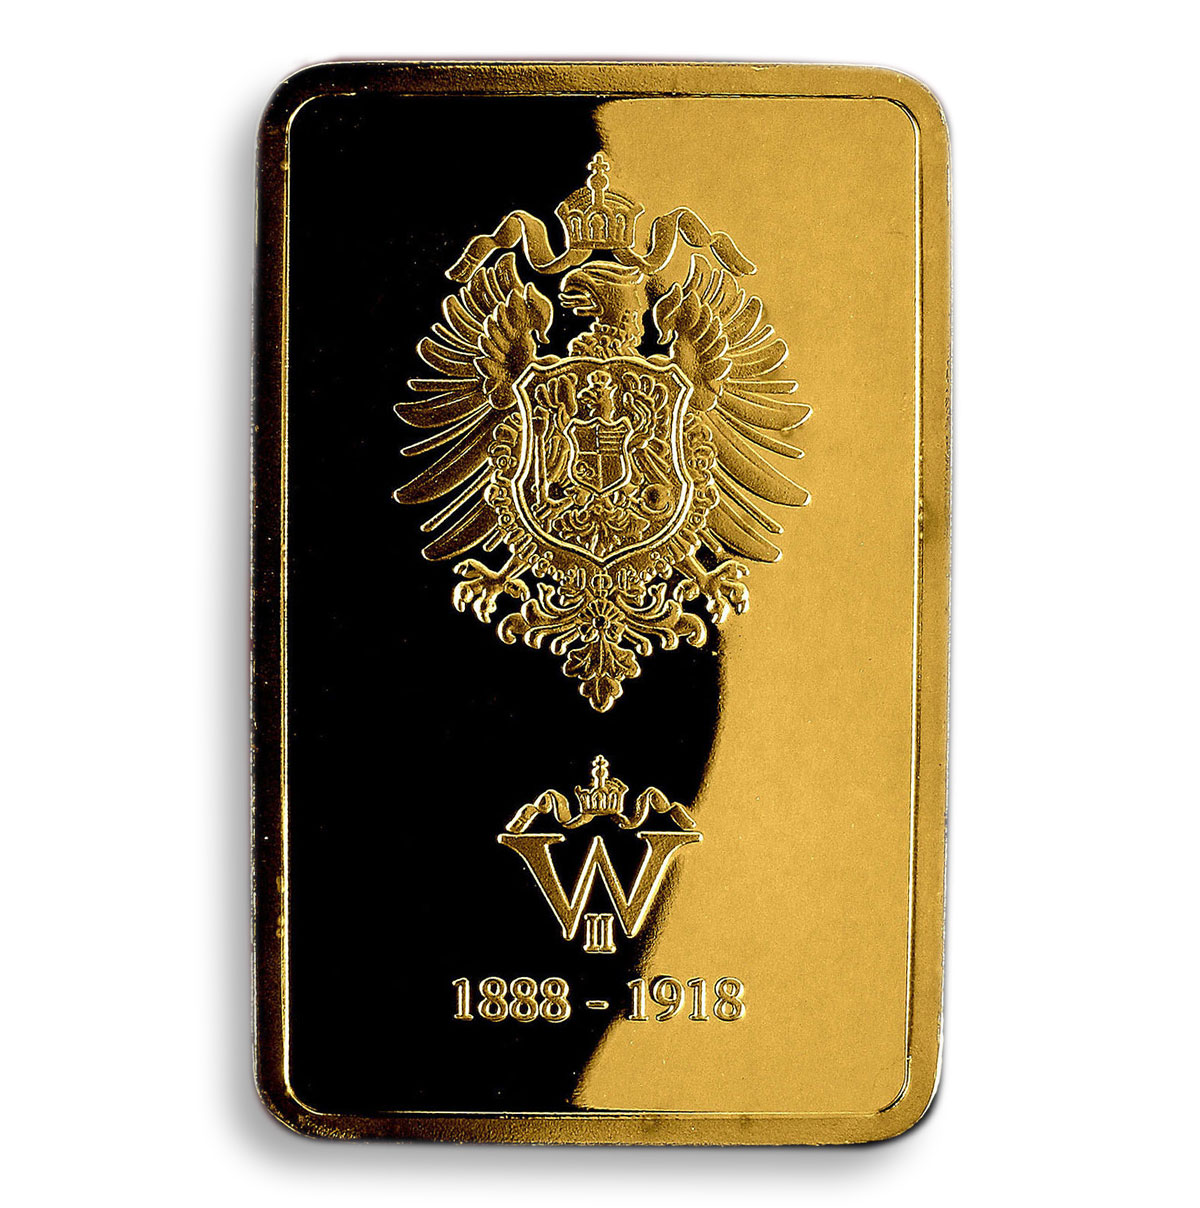 Germany, Deutsche Kaiser, Germany, Wilhelm II, Gold Plated bar, 1888-1918